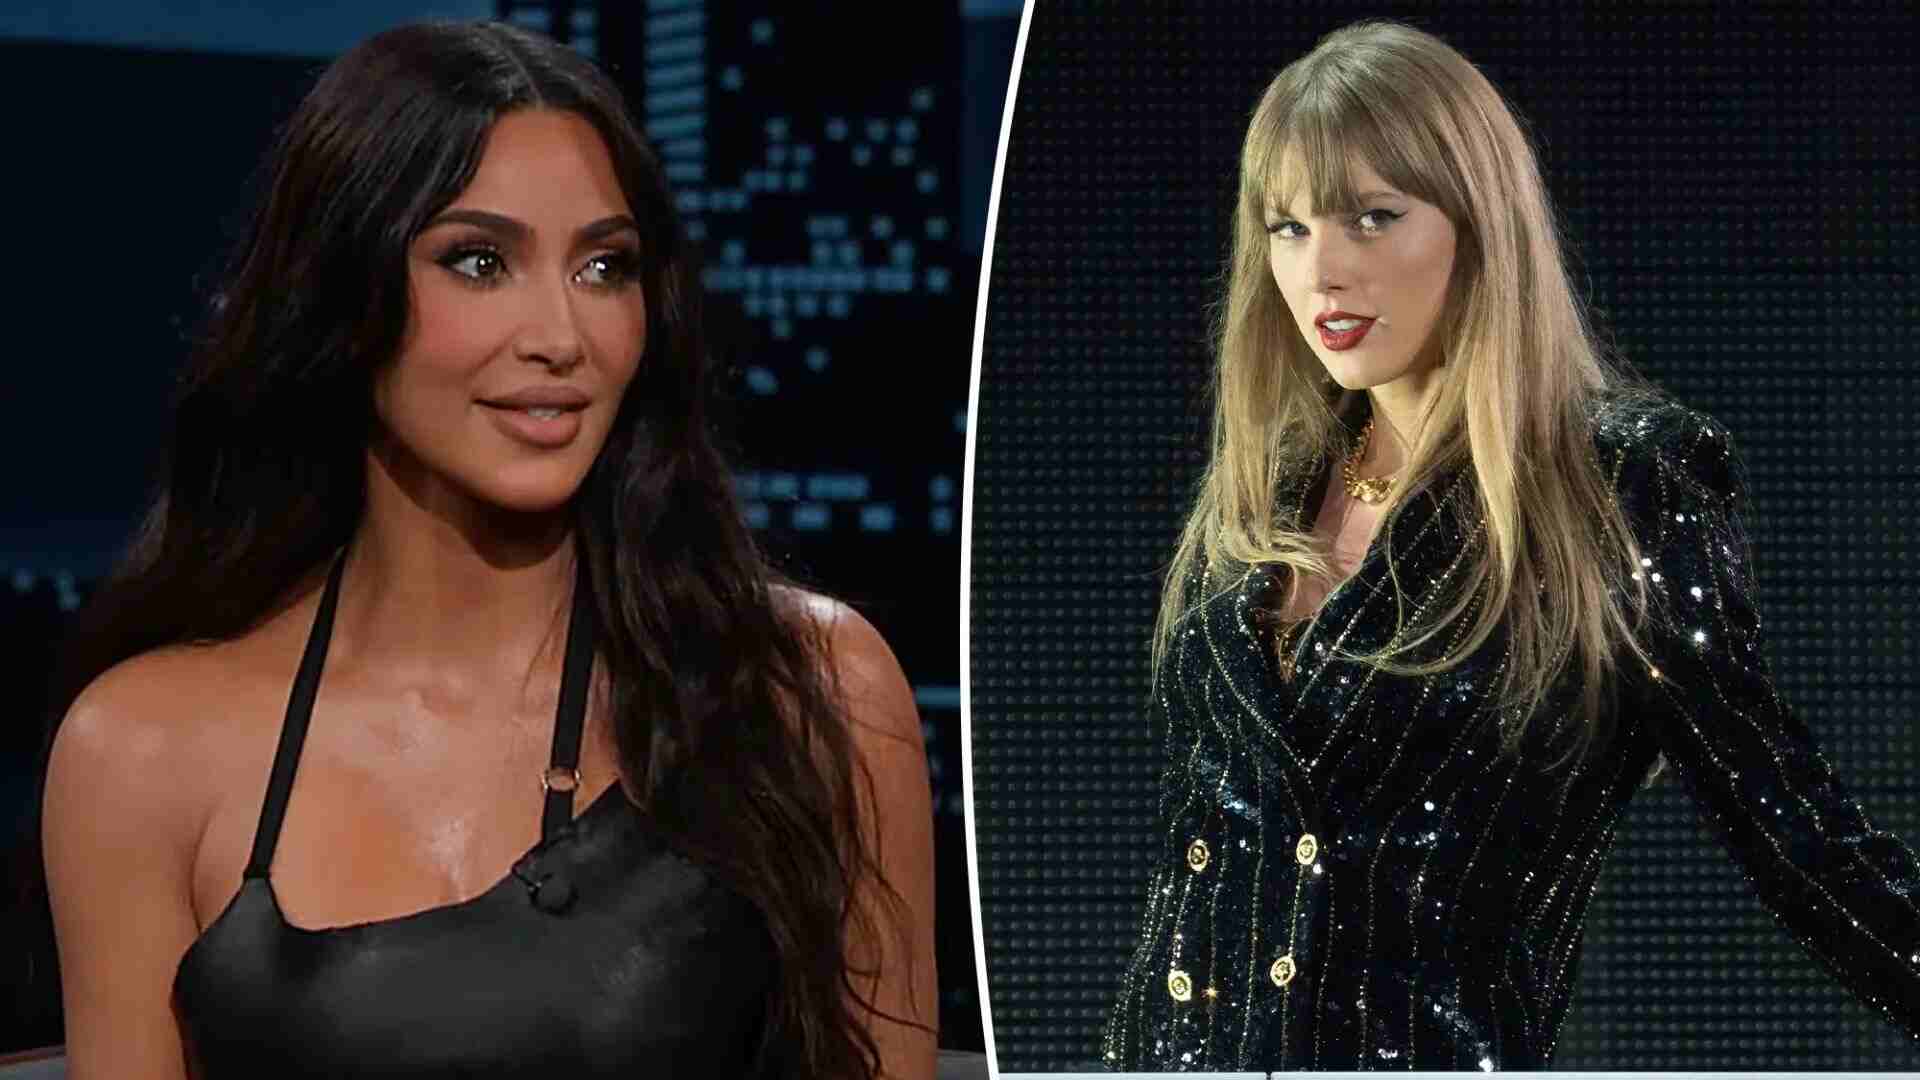 Kim Kardashian wishes to end feud with Taylor Swift